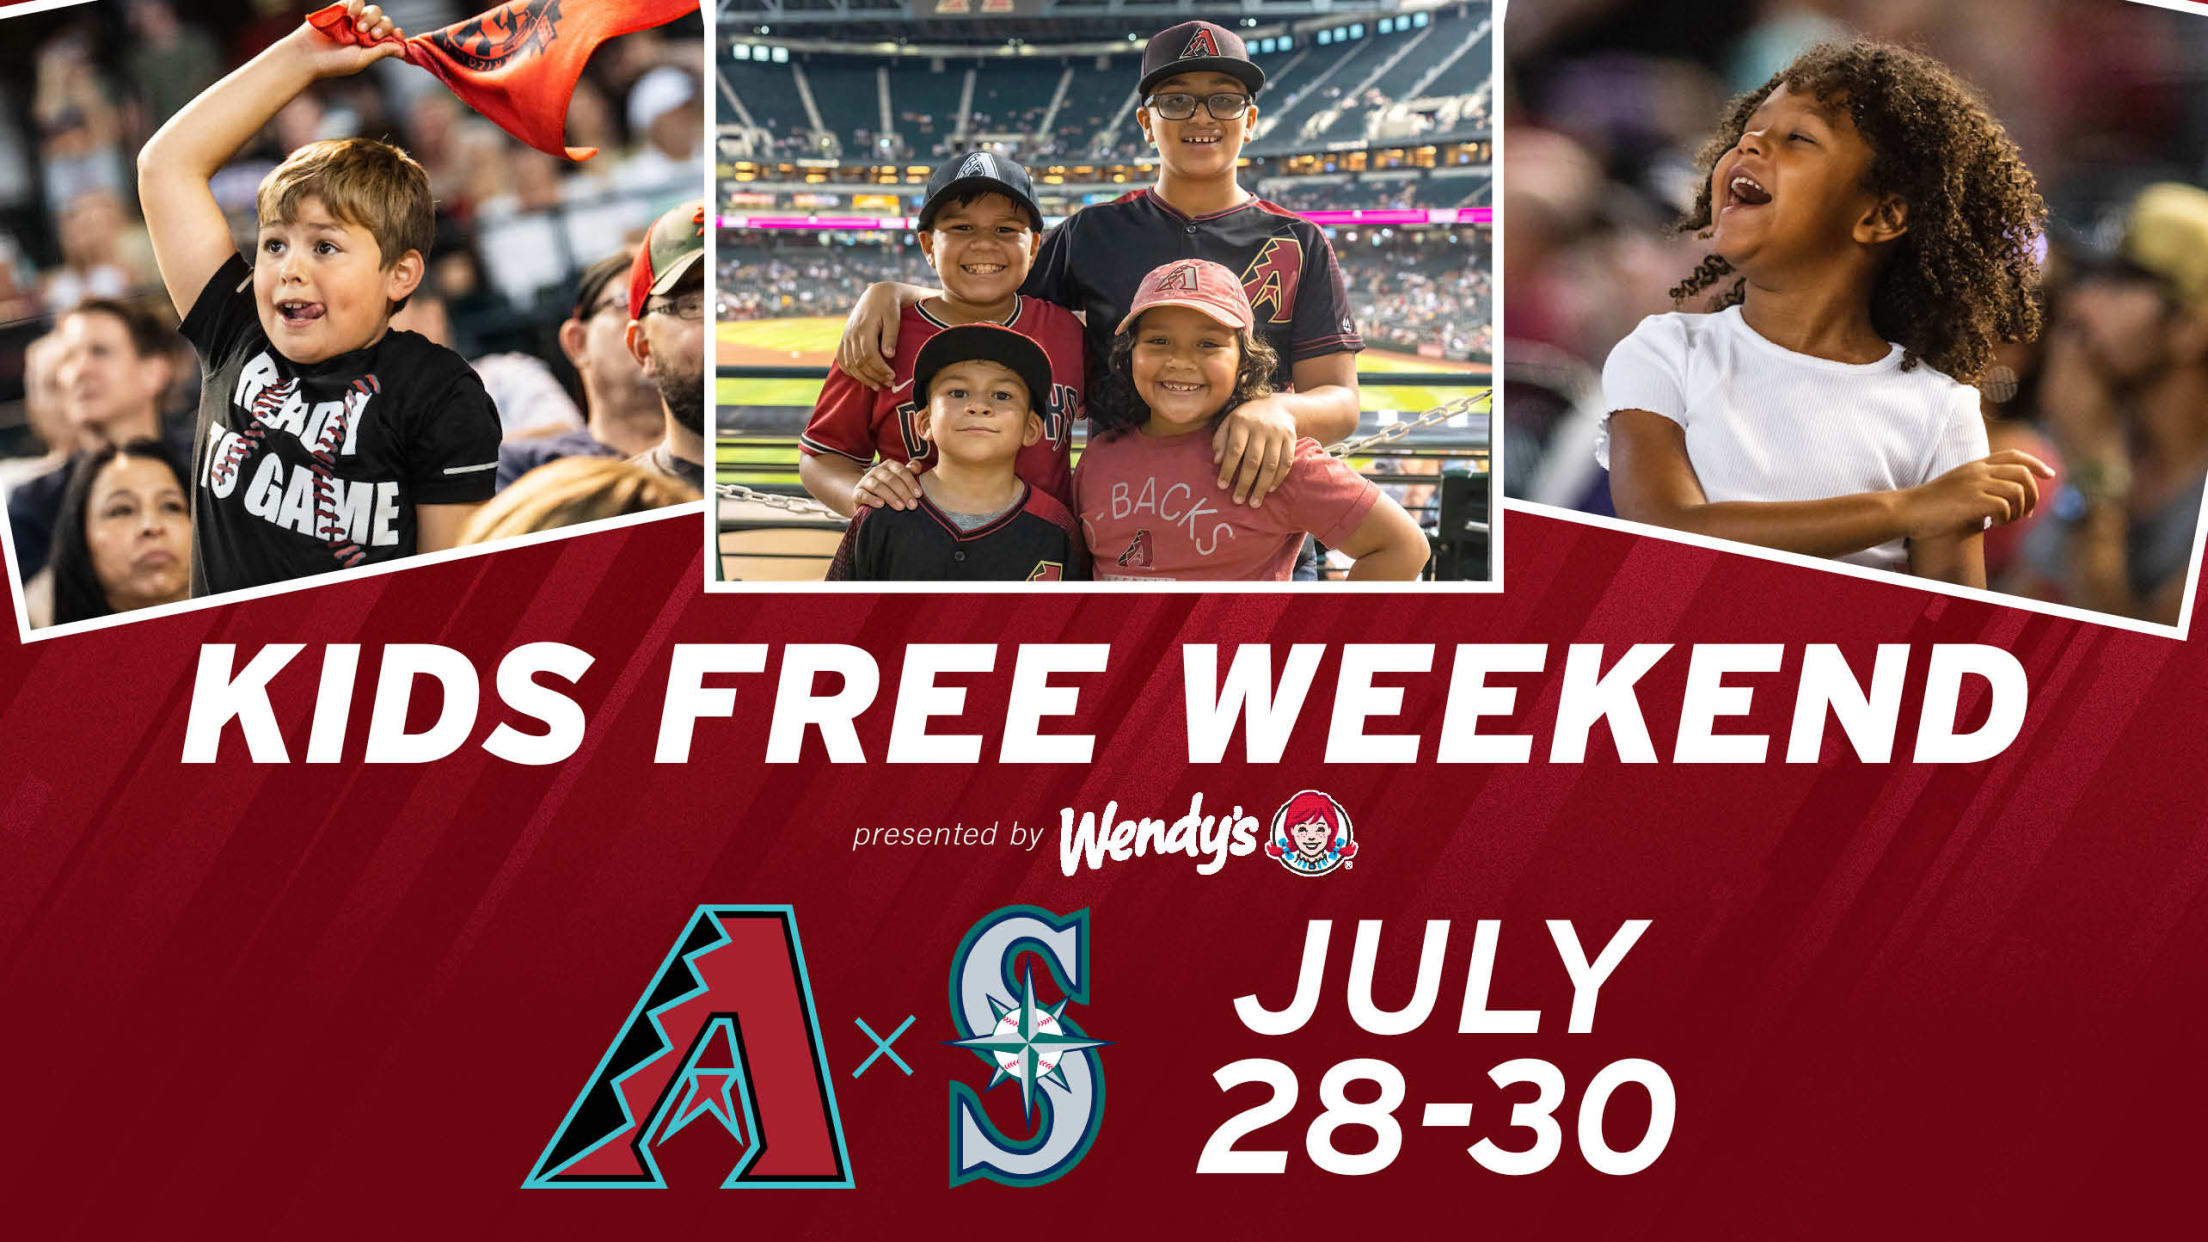 Diamondbacks announce Kids Free weekend July 28-30 at Chase Field